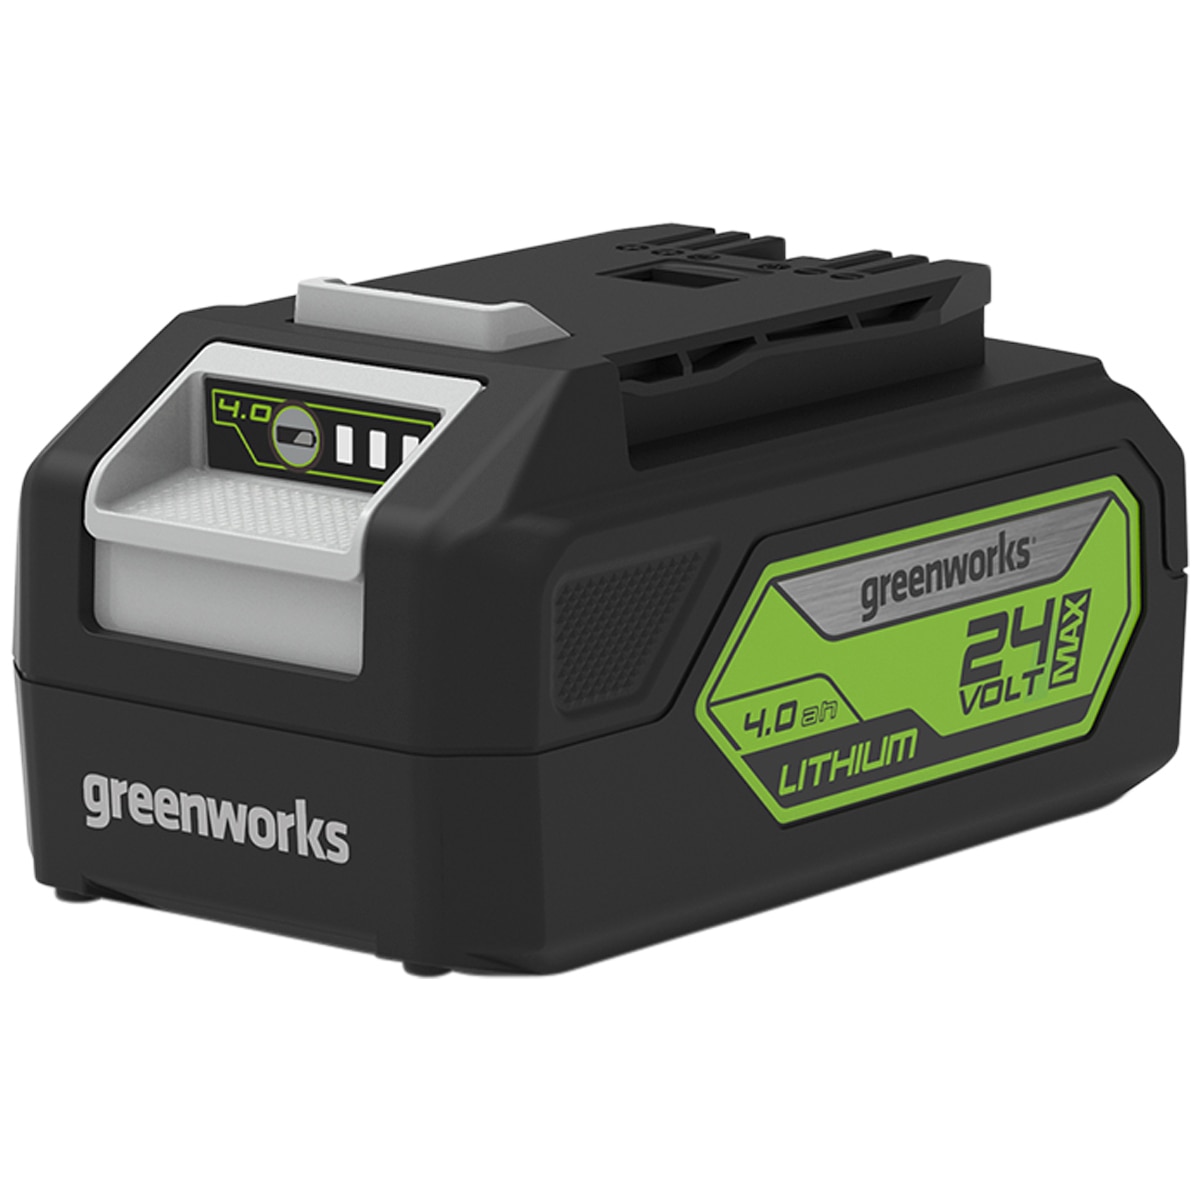 Greenworks 4 oAh Battery